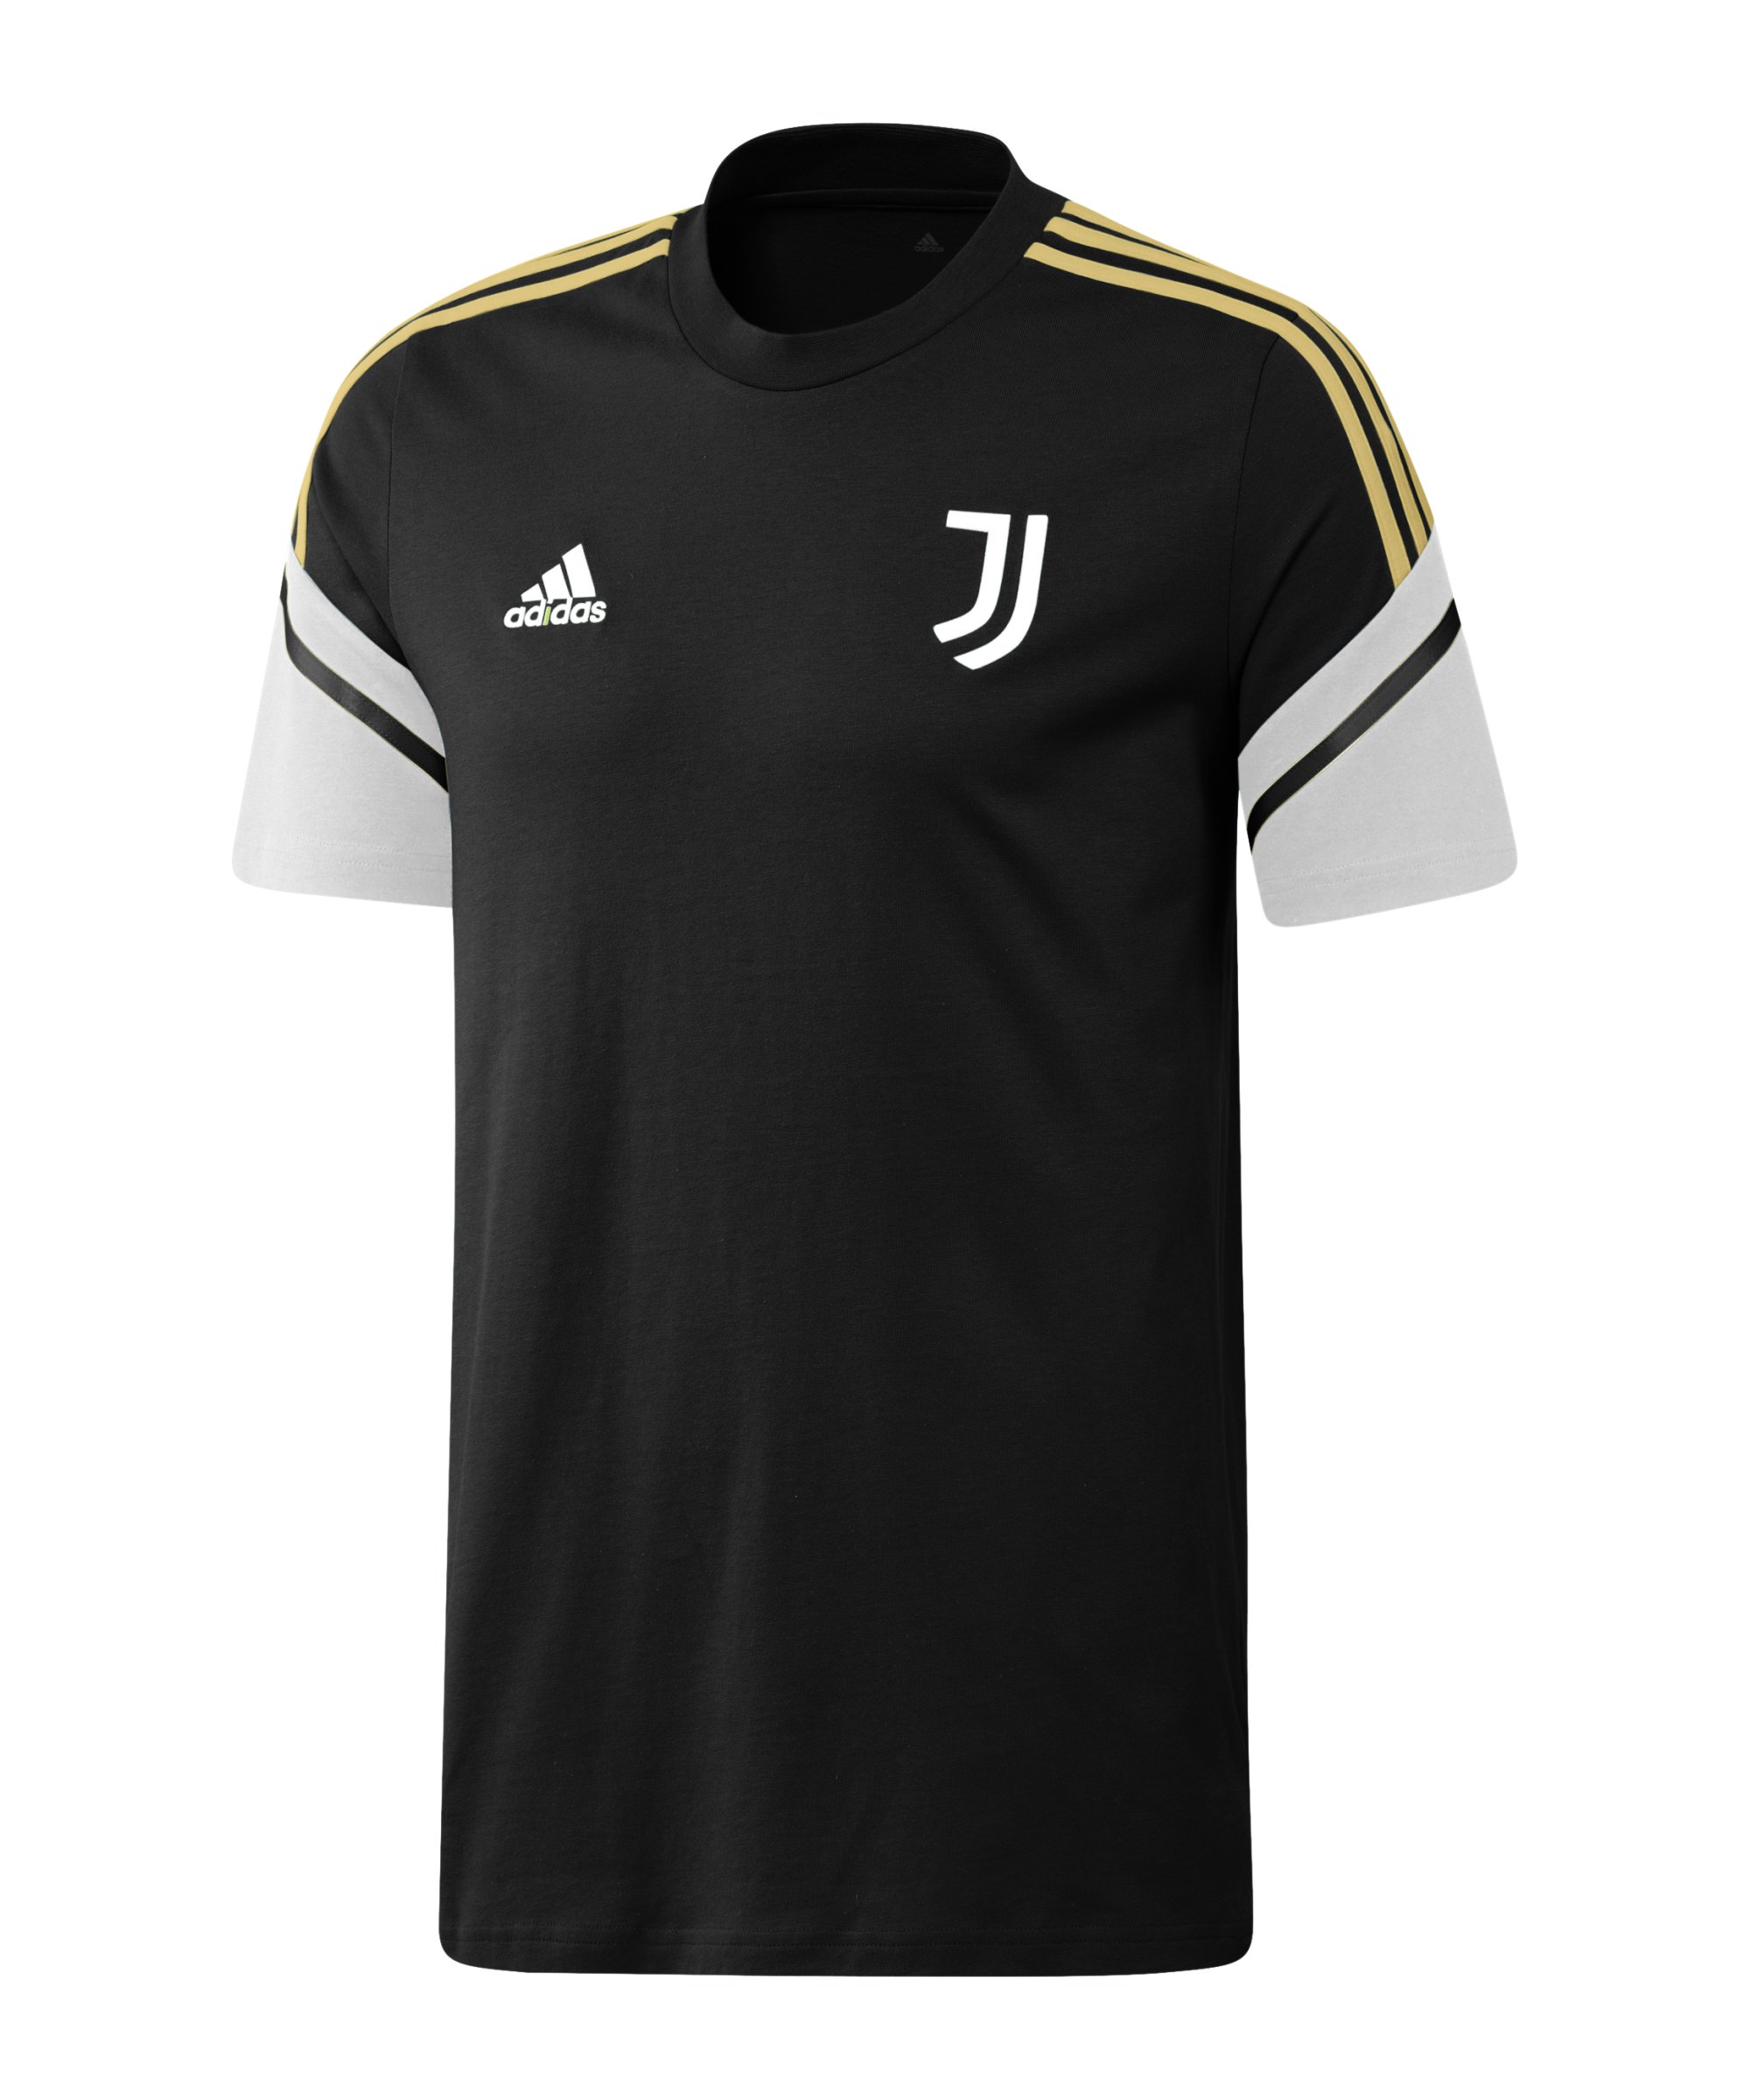 adidas Juventus Turin T-Shirt Schwarz - schwarz